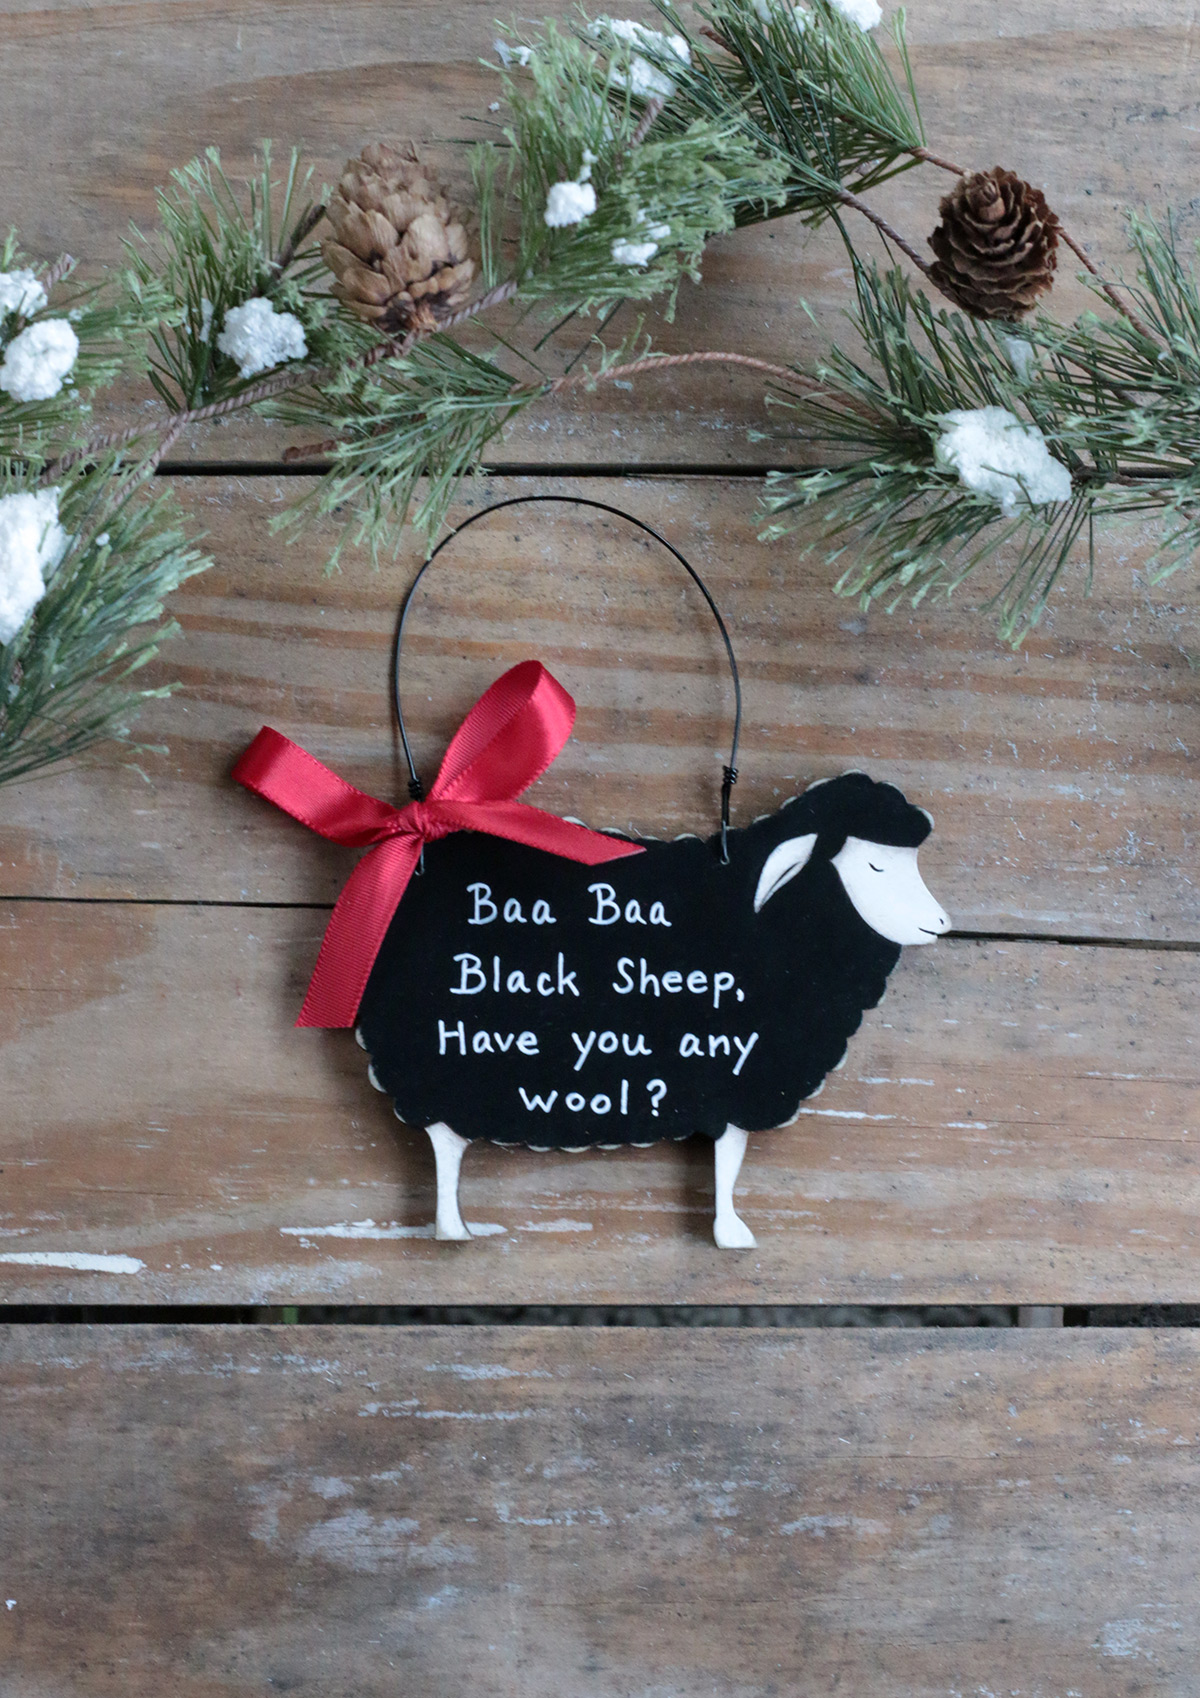 Farmhouse Decor Primitive Sheep Christmas Ornament Sheep Lover's Gift Holiday Ornaments Sheep Tree Ornament Ranch Decor